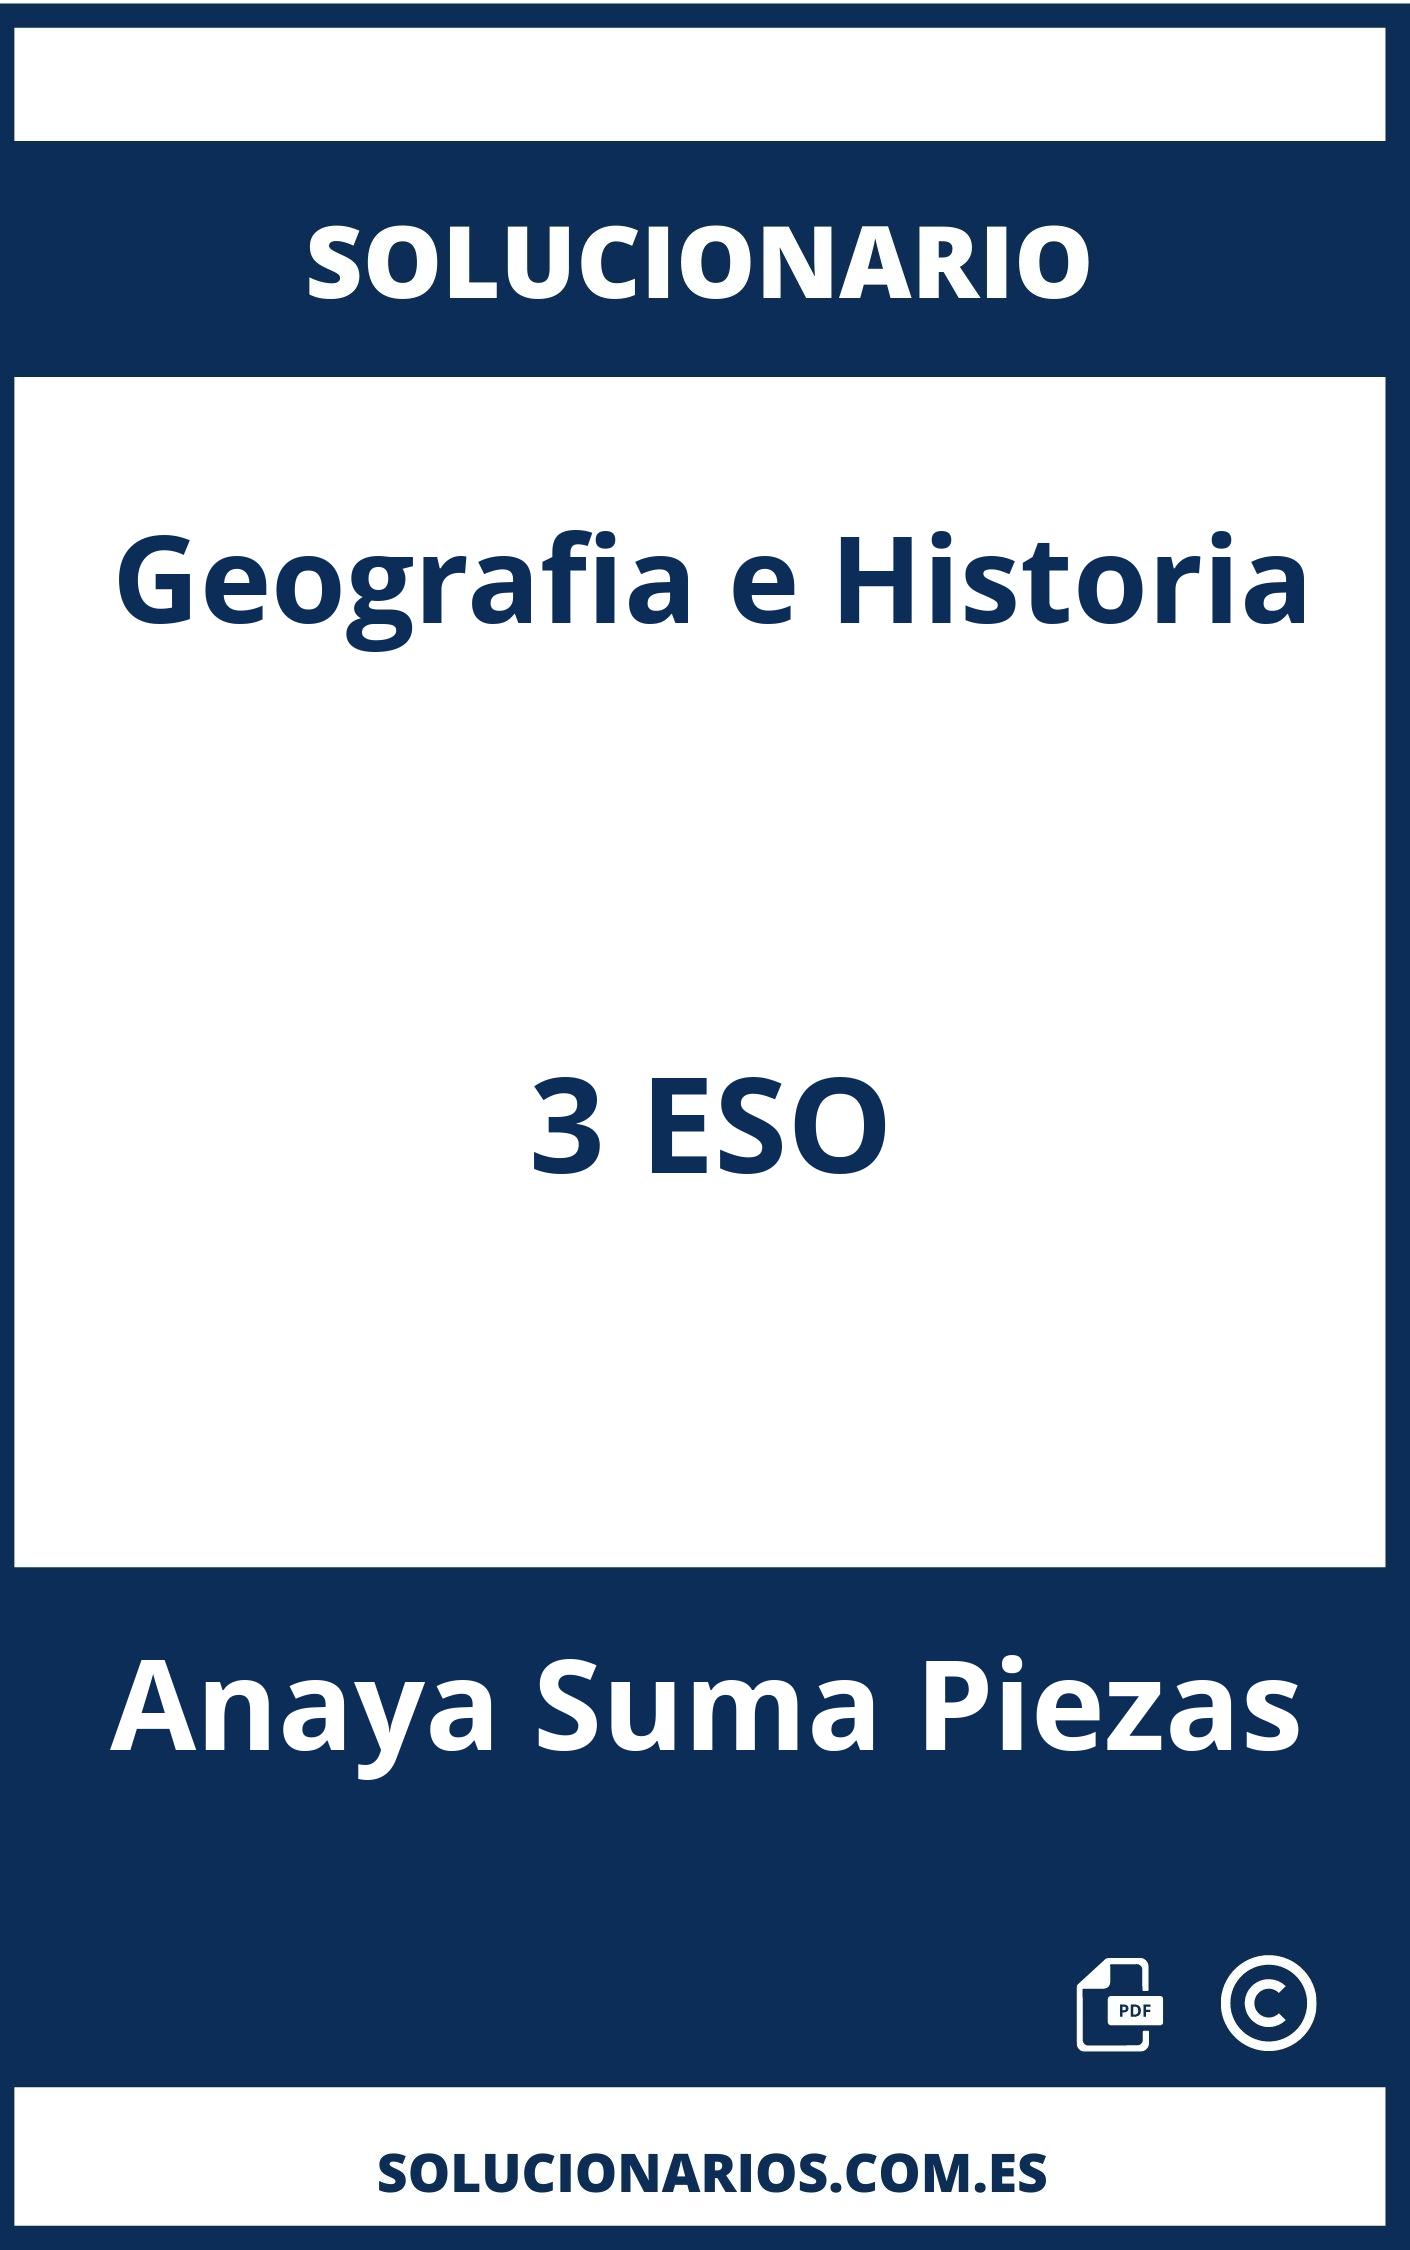 Solucionario Geografia e Historia 3 ESO Anaya Suma Piezas